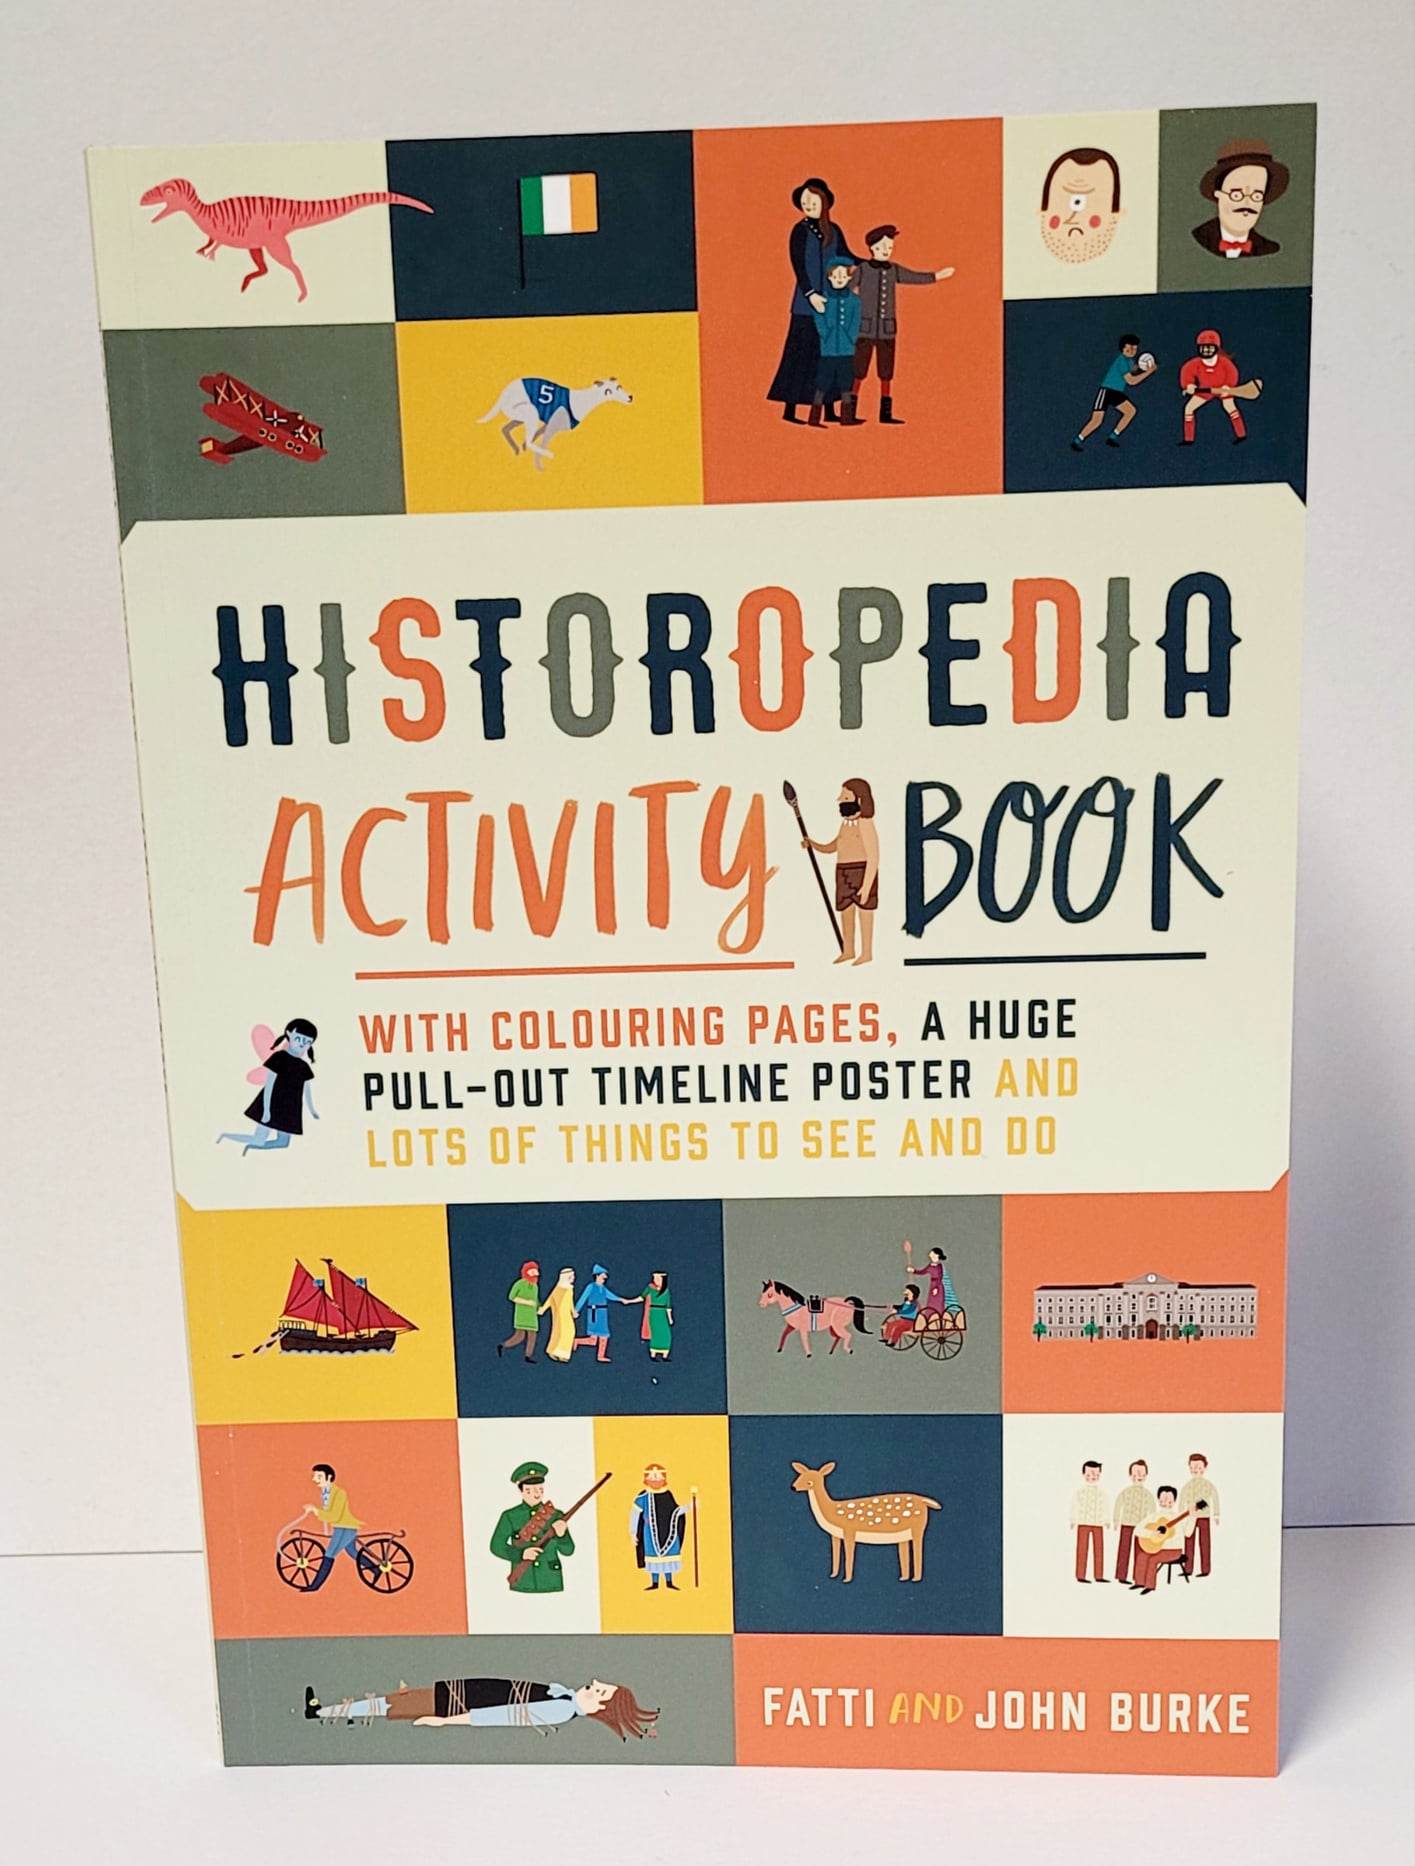 Historopedia Activity Book by Fatti and John Bourke